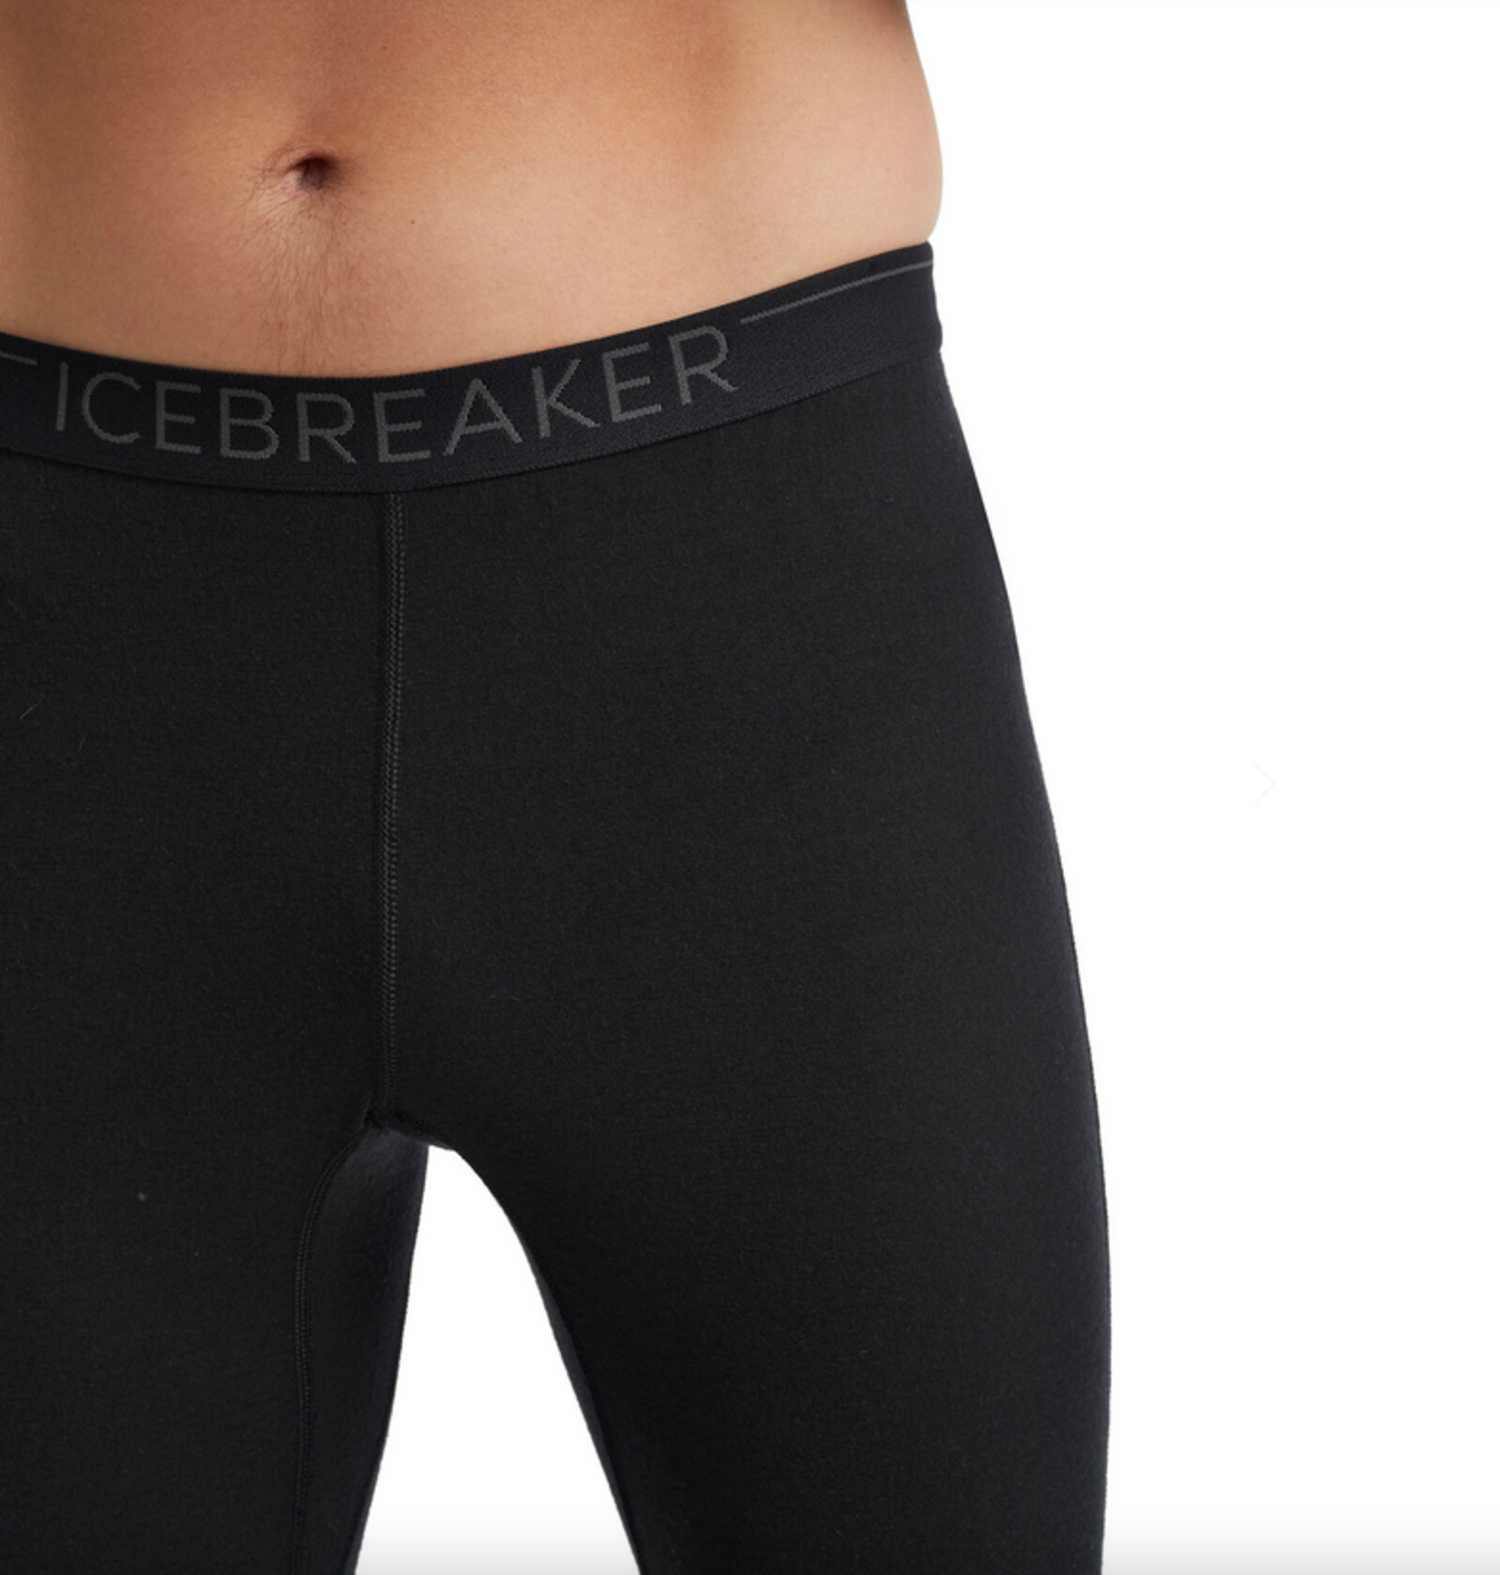 Icebreaker Oasis Leggings Men's Size: L / Color (style): black